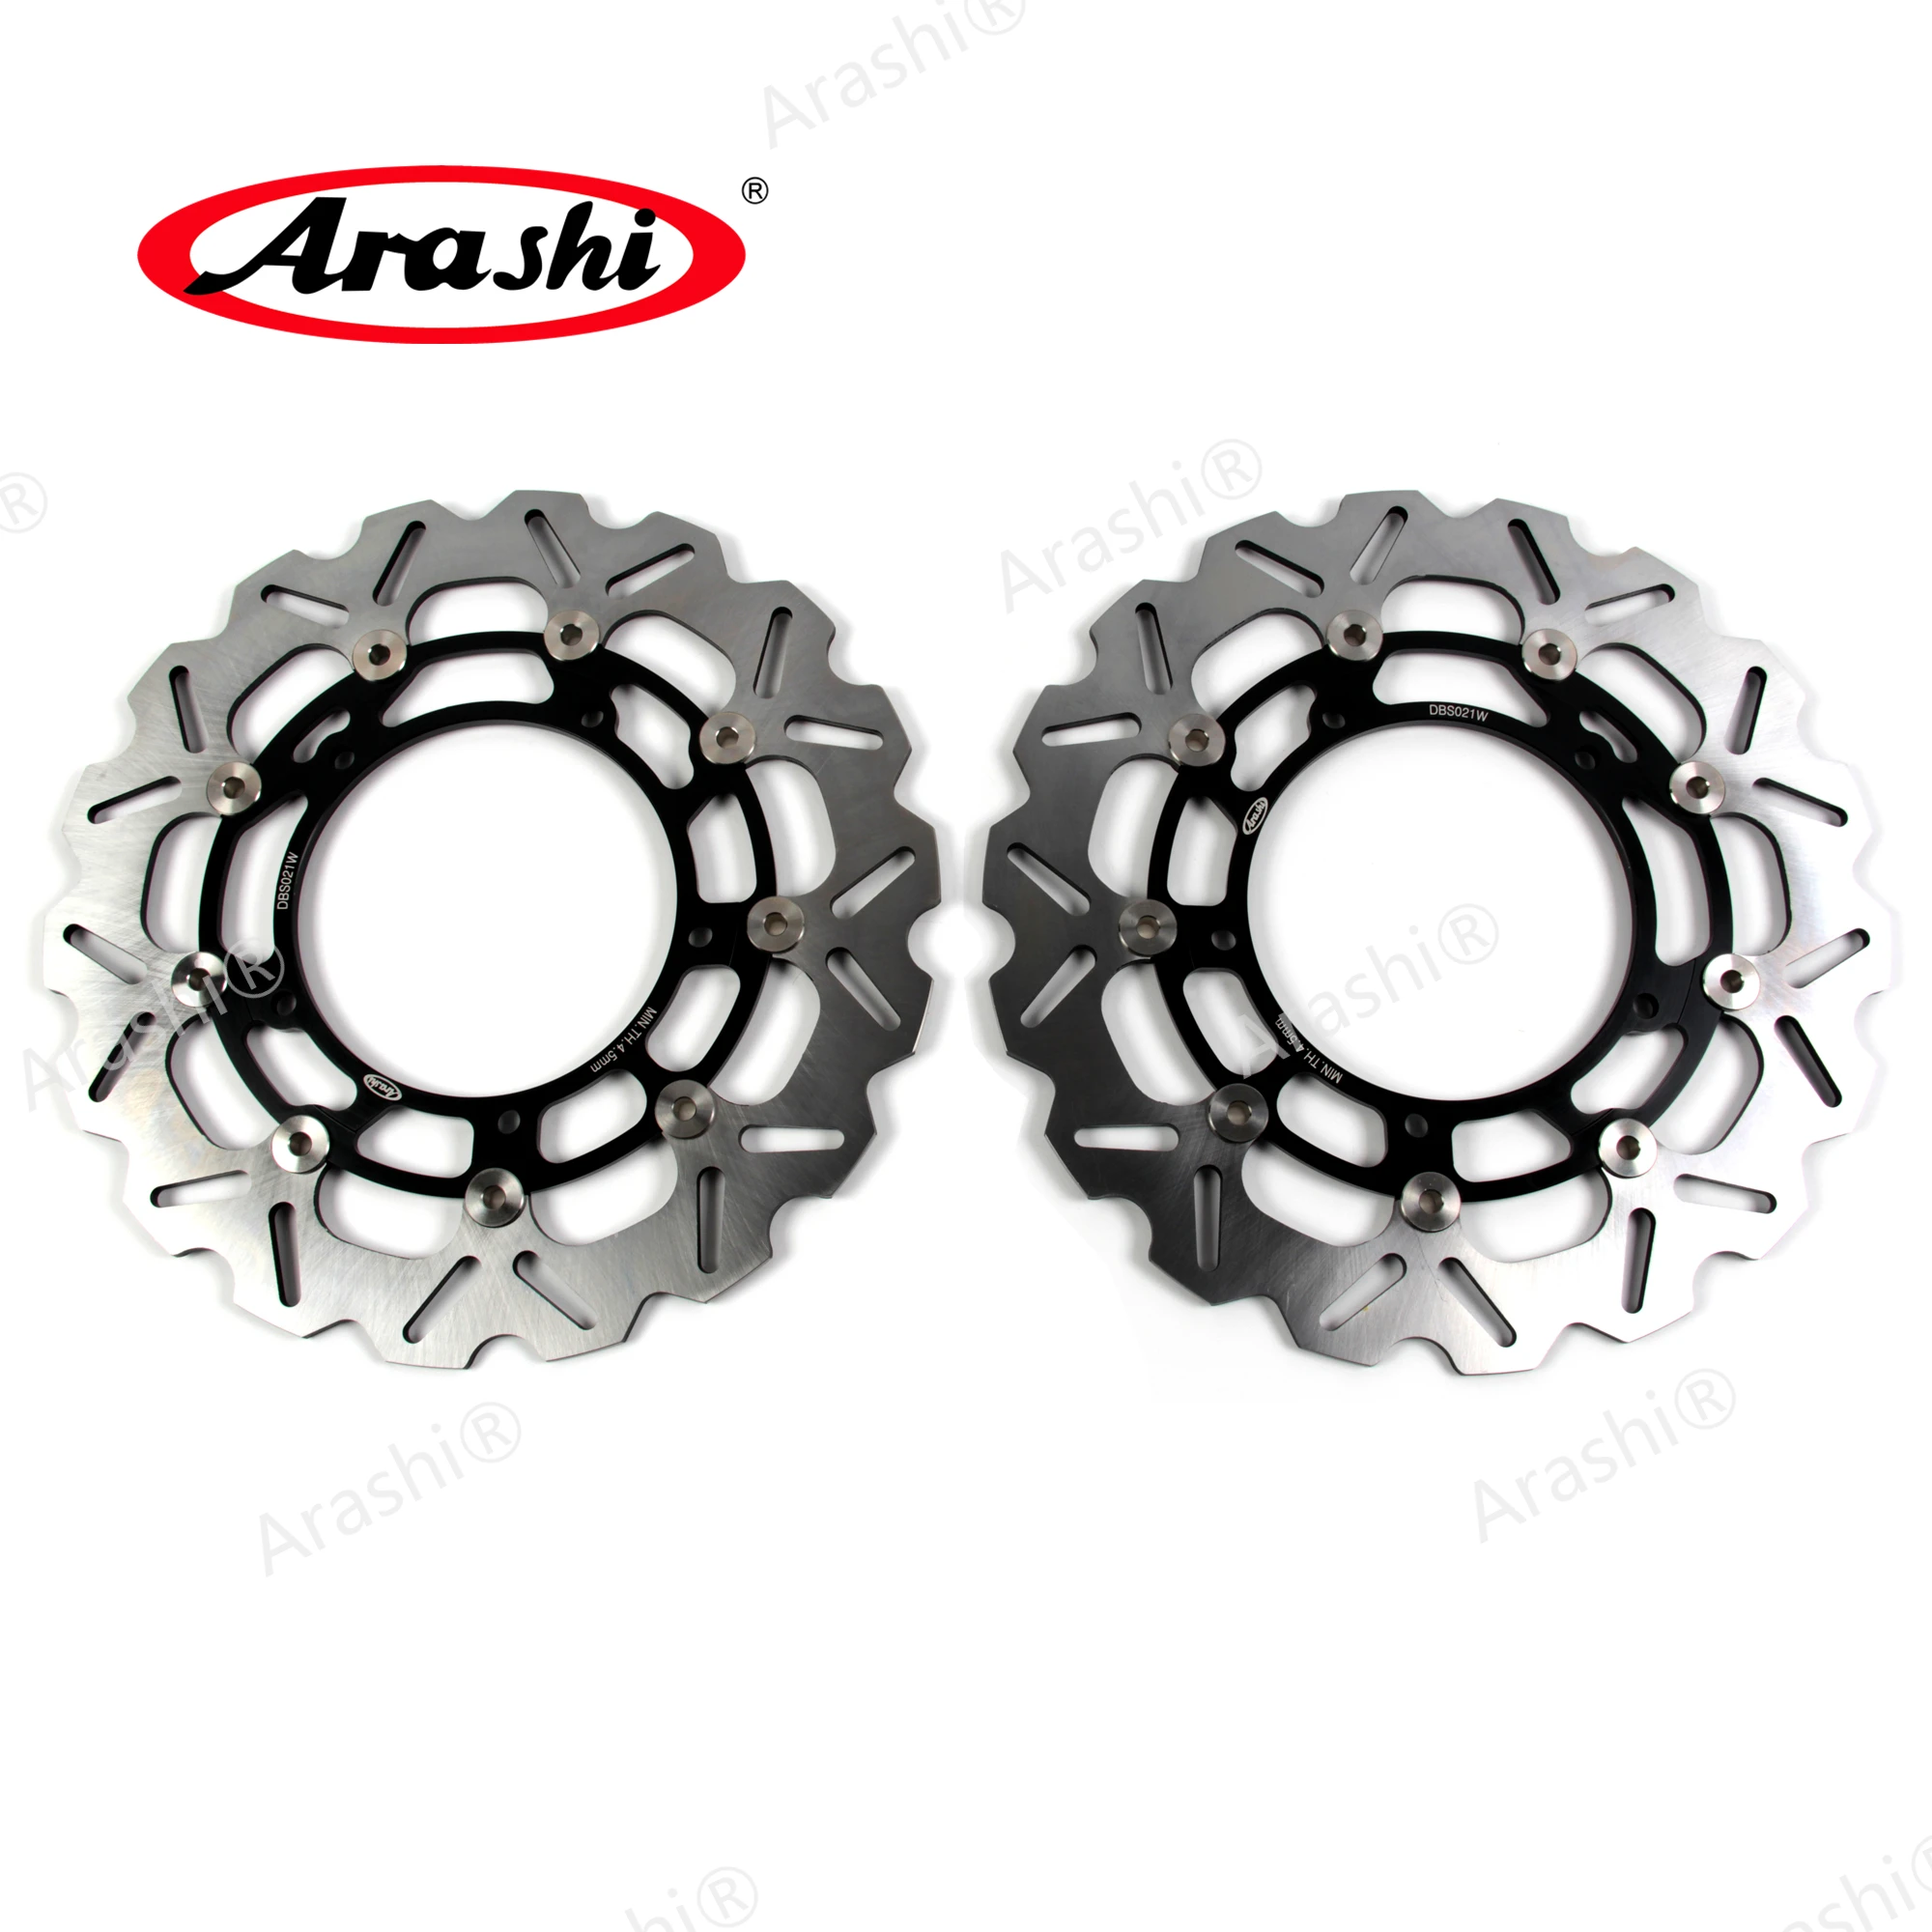 

ARASHI CNC Front Rotors Brake Discs For YAMAHA YZF R6 2005-2016 / YZF R1 2007-2014 / FAZER 8 / FZ8 2010-2015 / FZ8 ABS 2011-2015